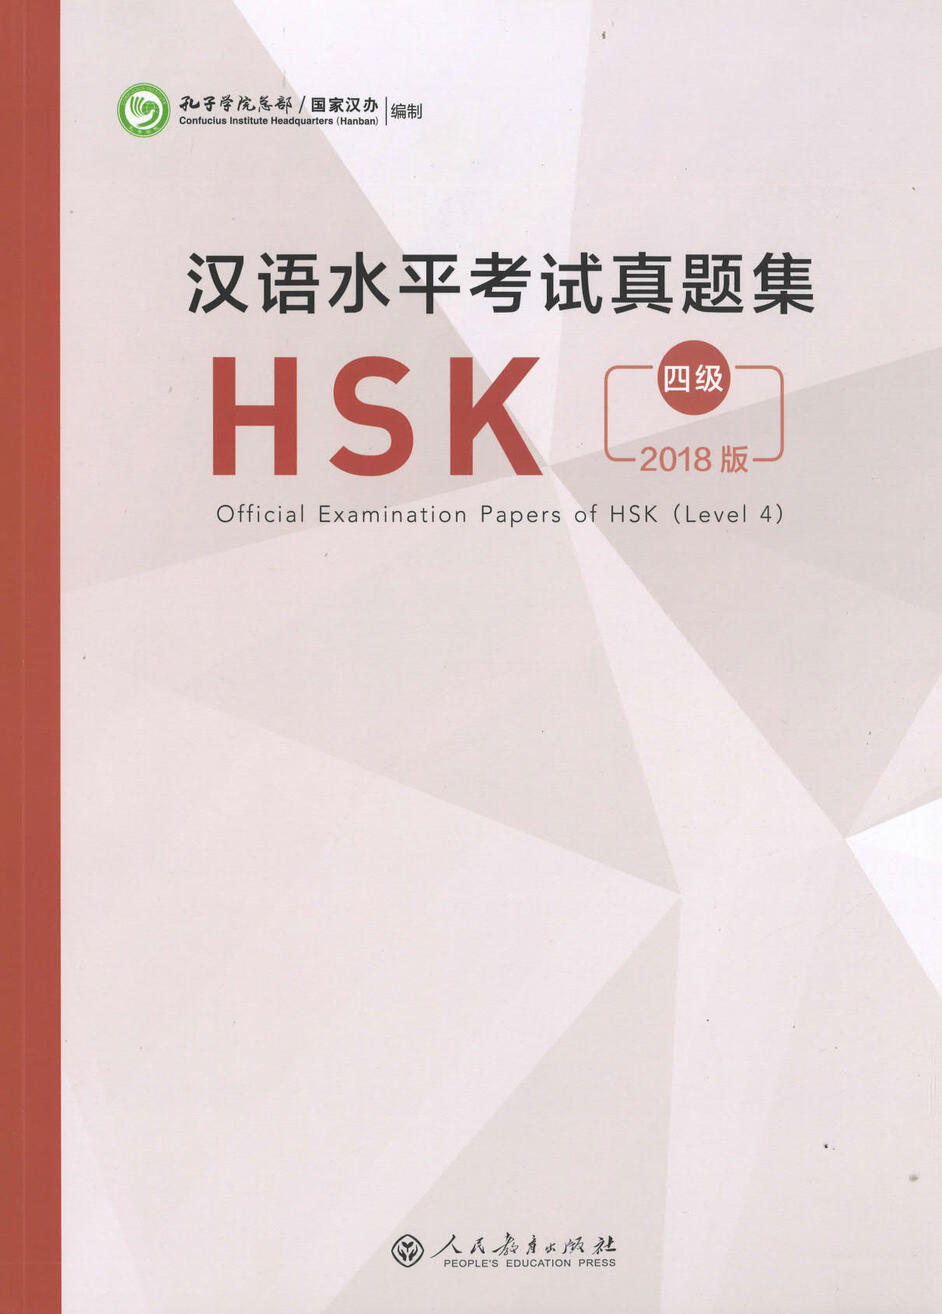 hsk 5 standard course workbook